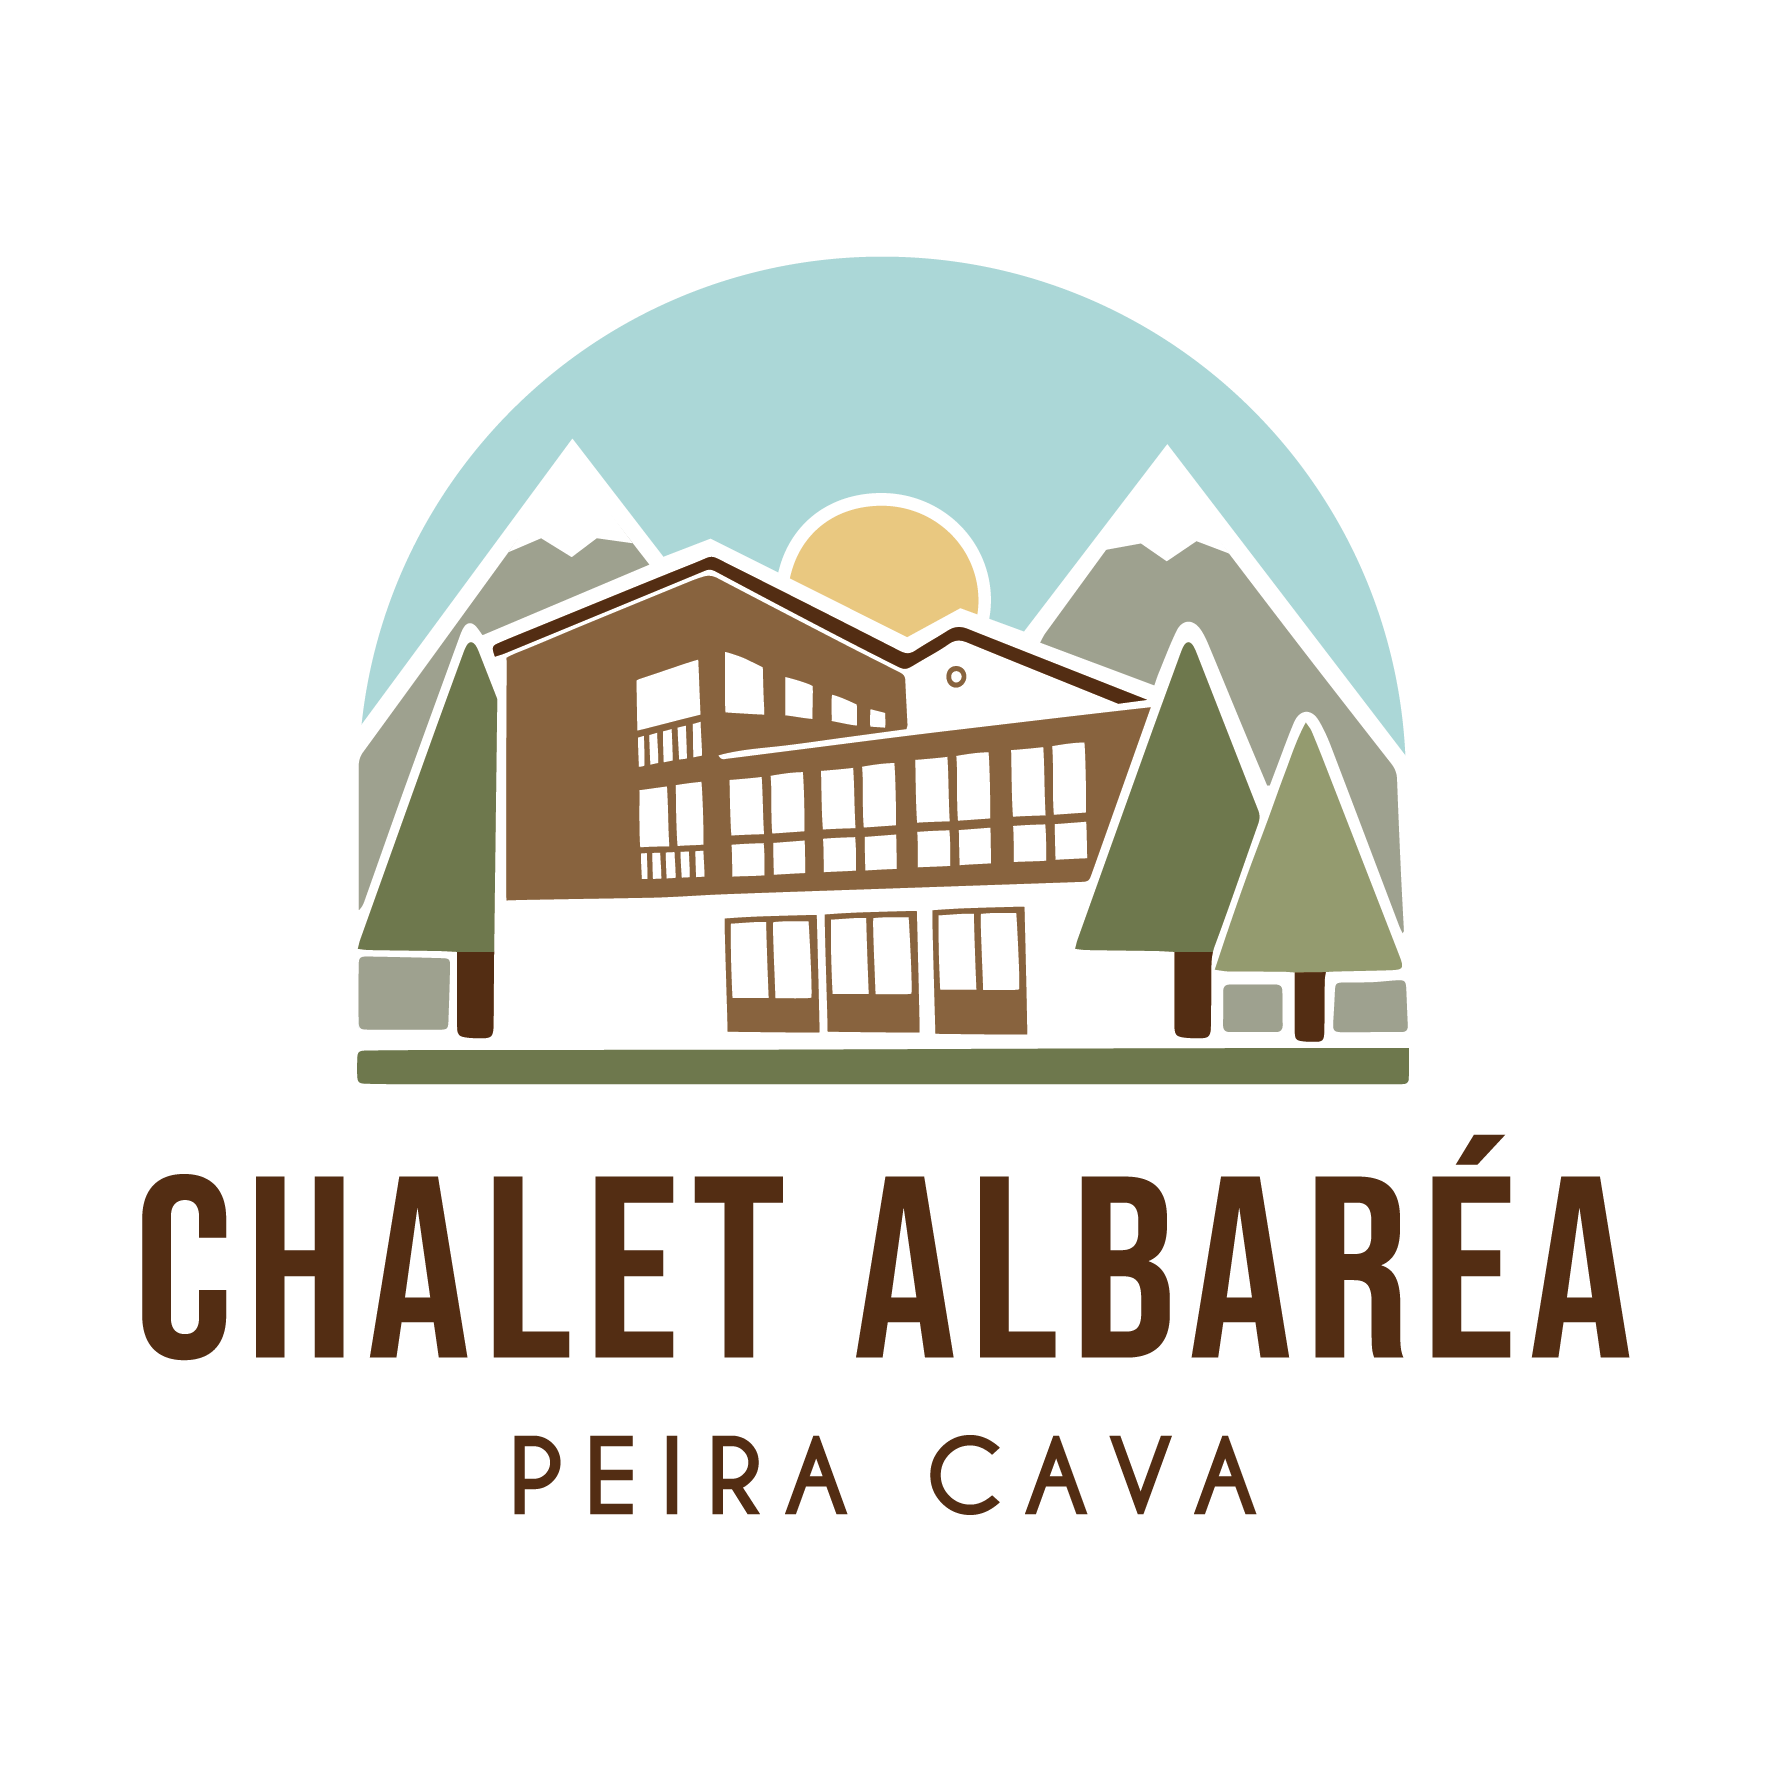 CHALET ALBAREA